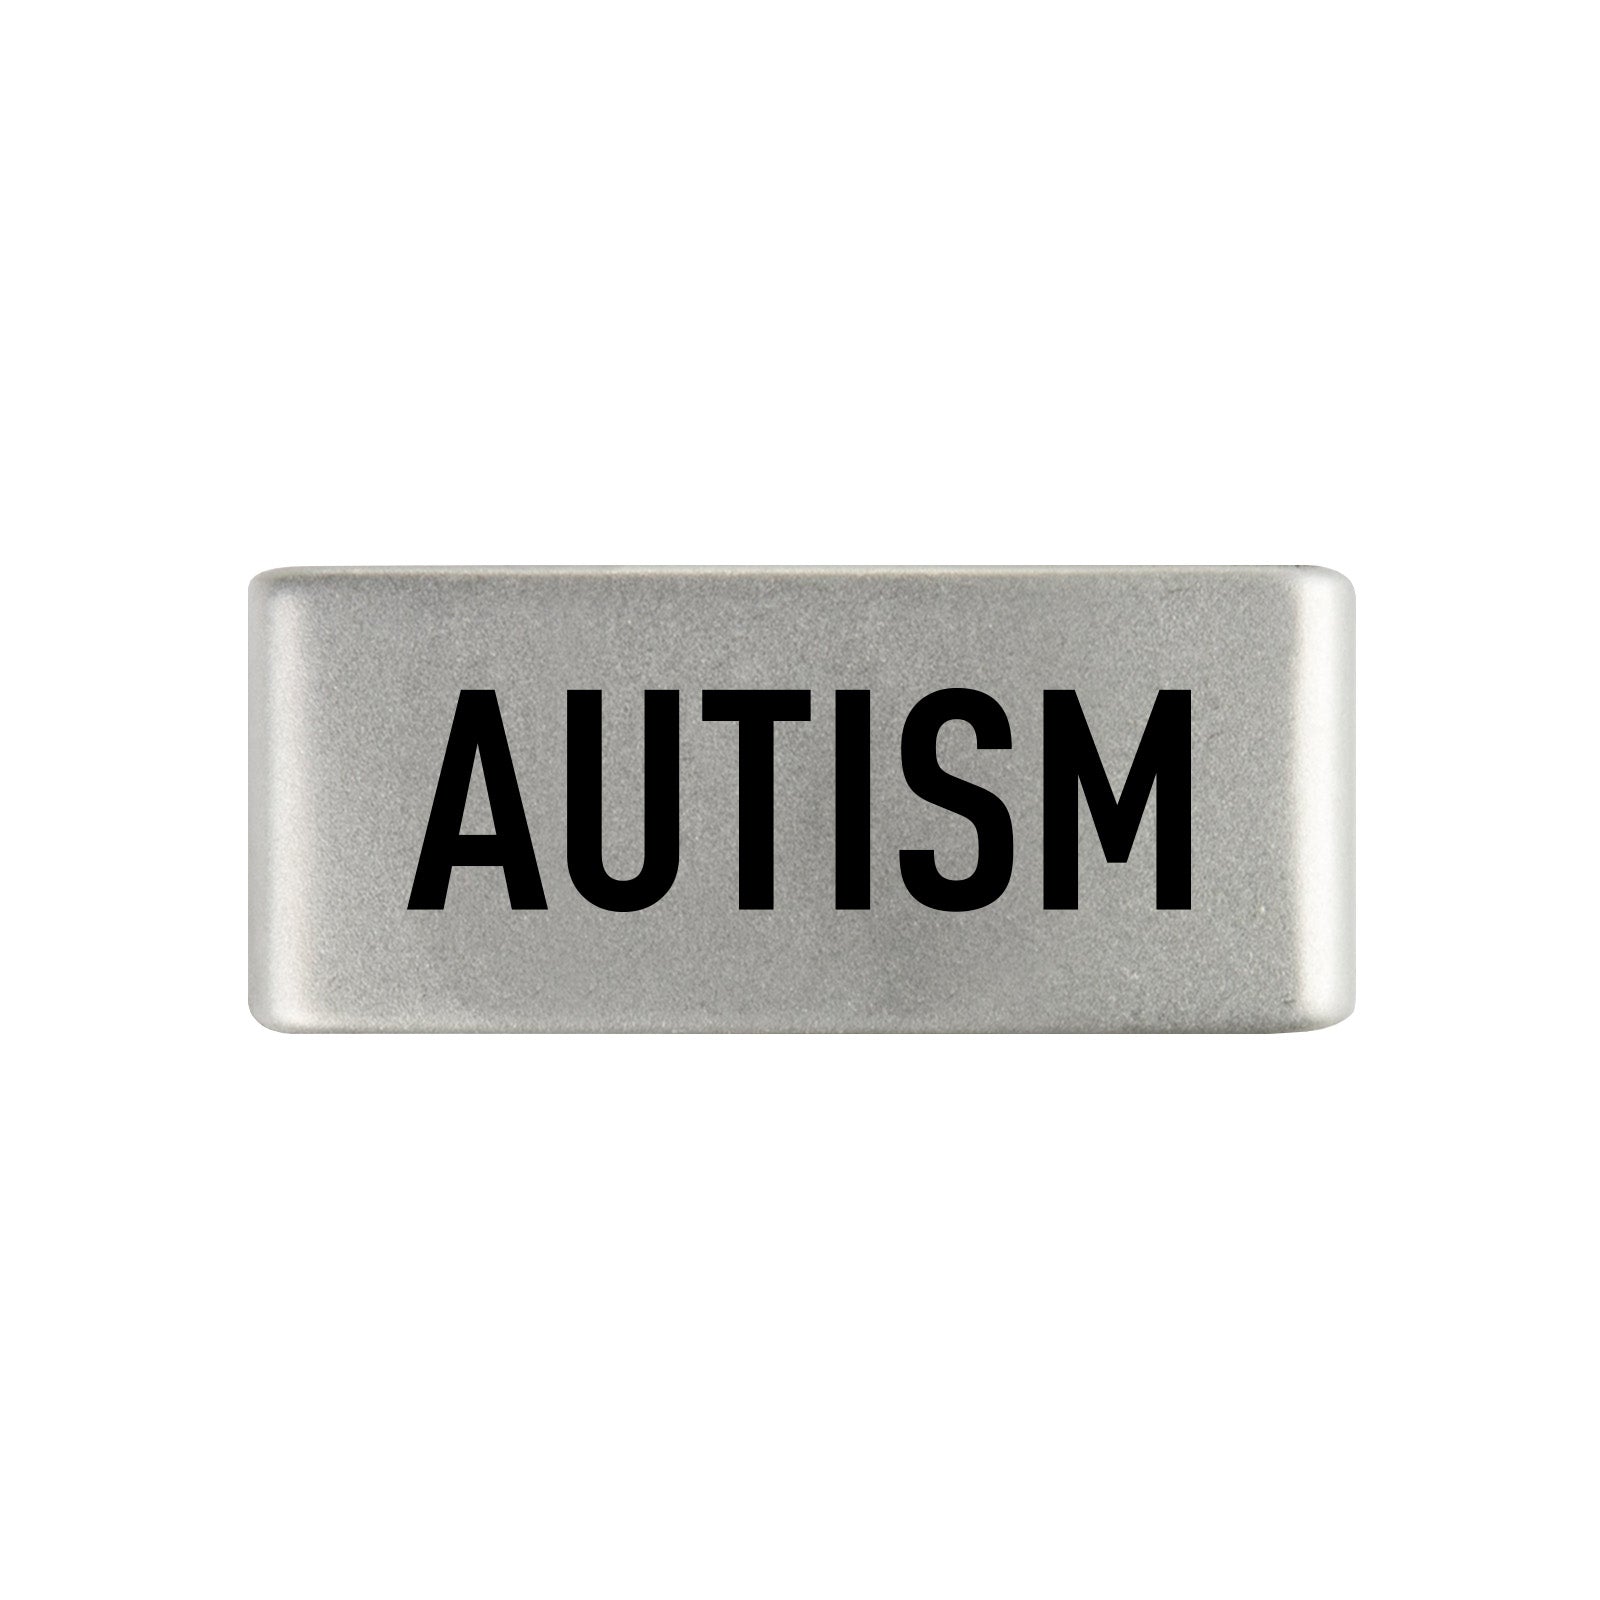 Autism Badge Badge 13mm - ROAD iD